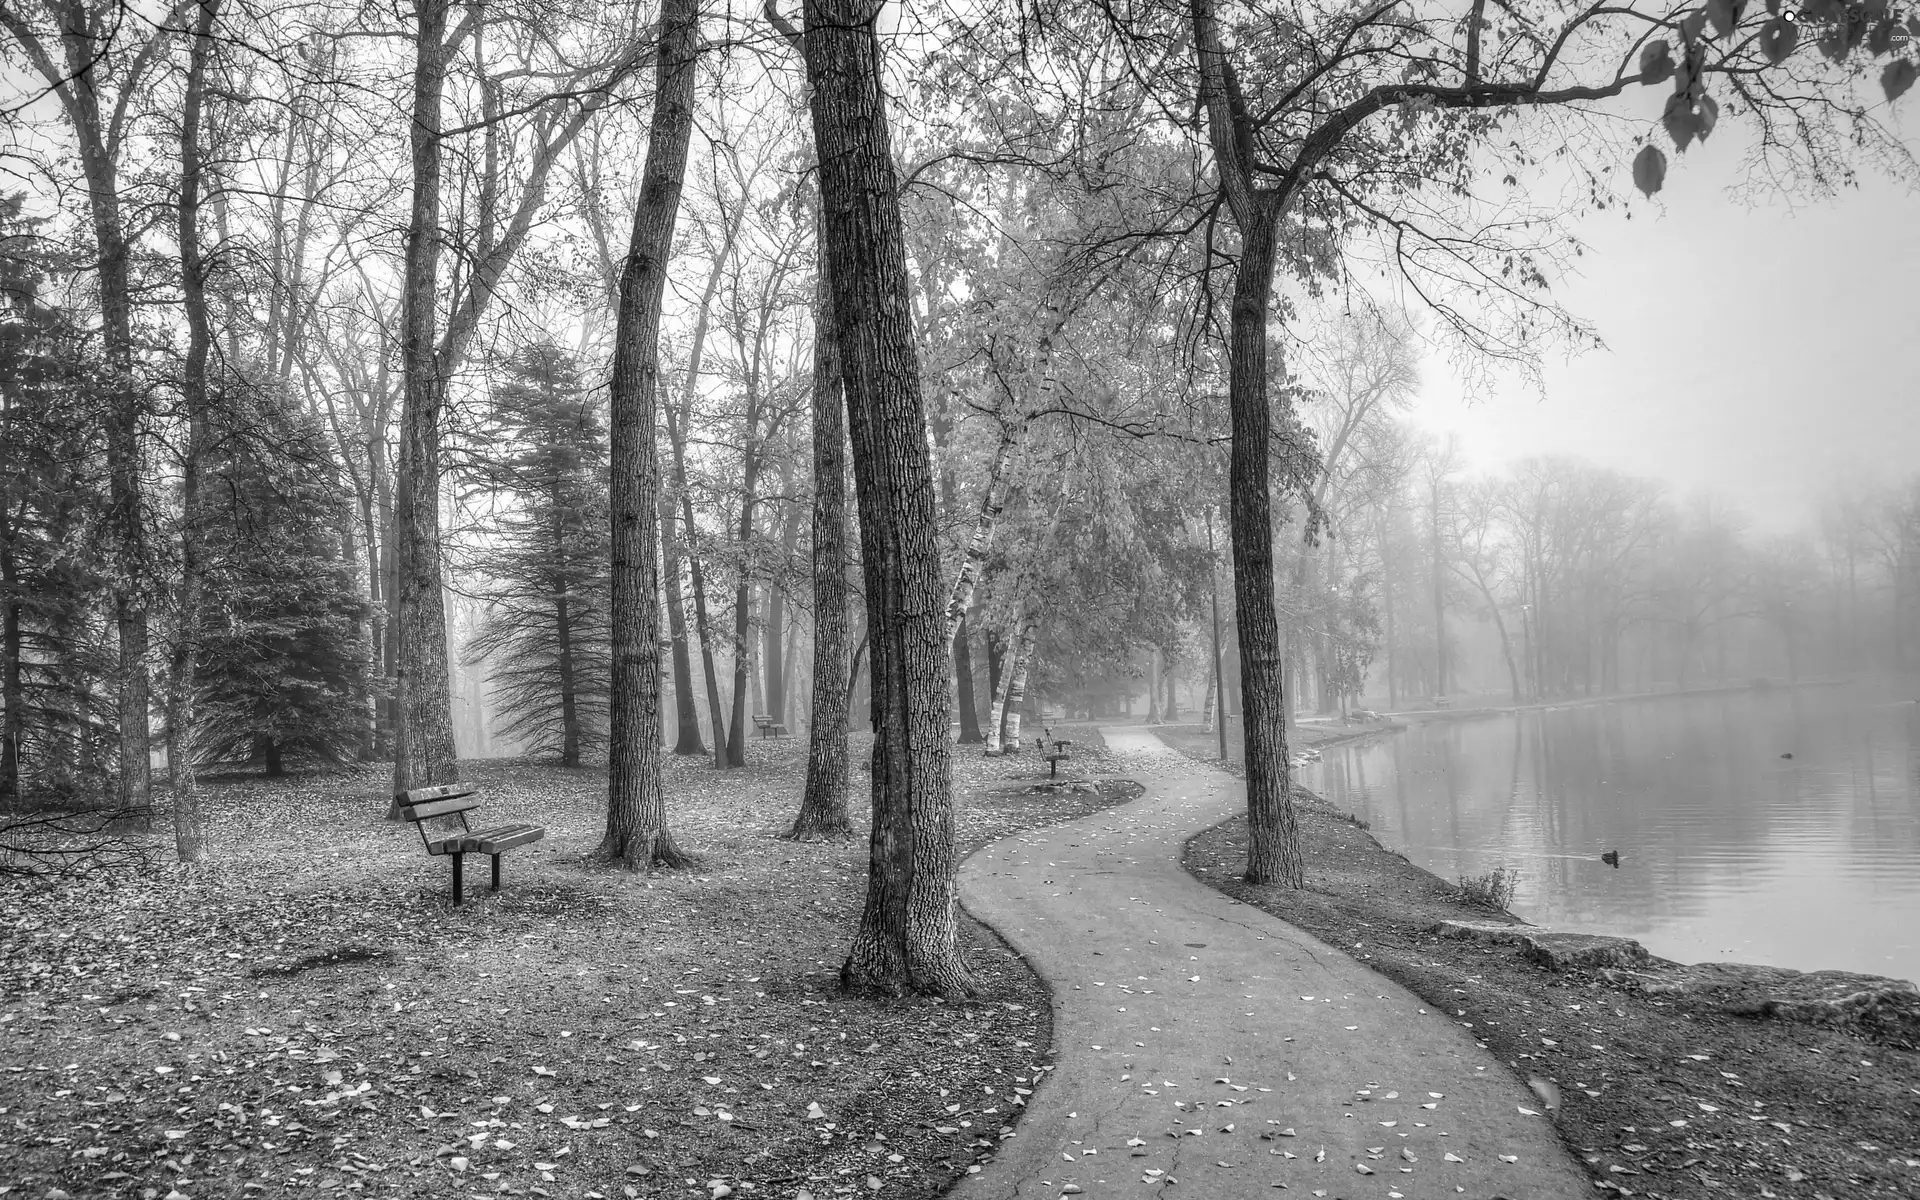 Fog, River, Leaf, ducks, Park, bench, autumn